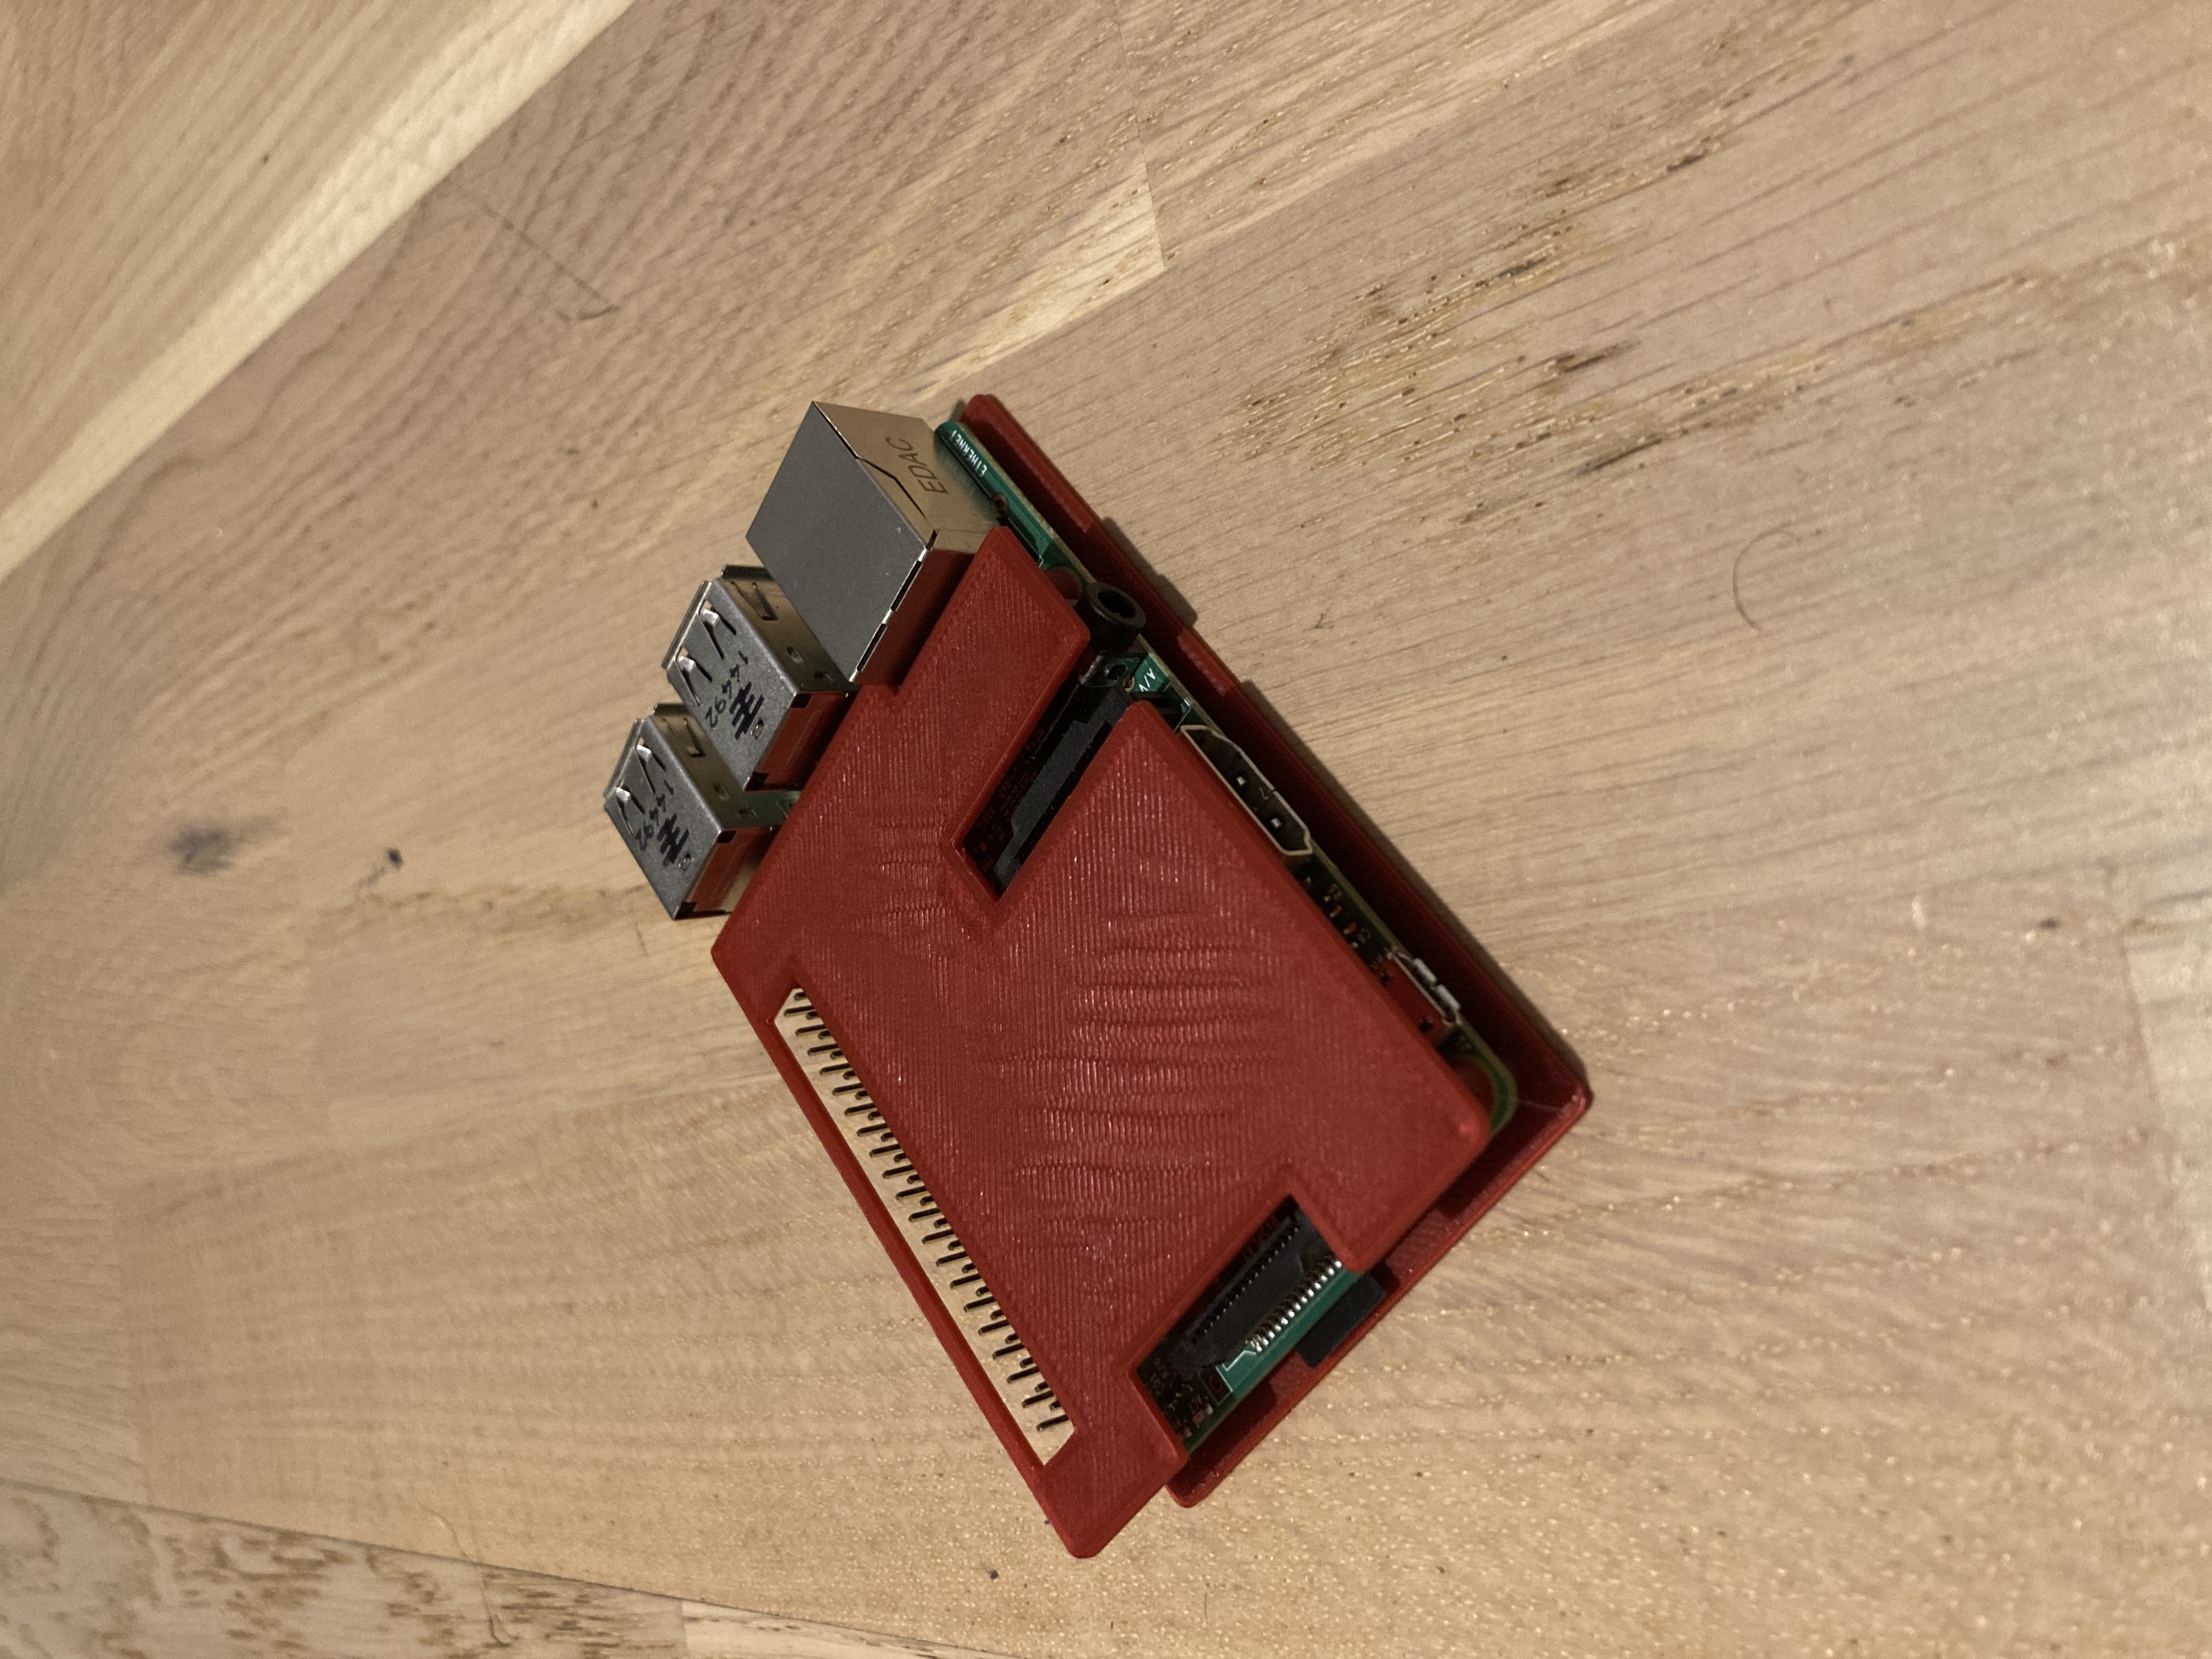 Minimal Raspberry Pi 2 Case